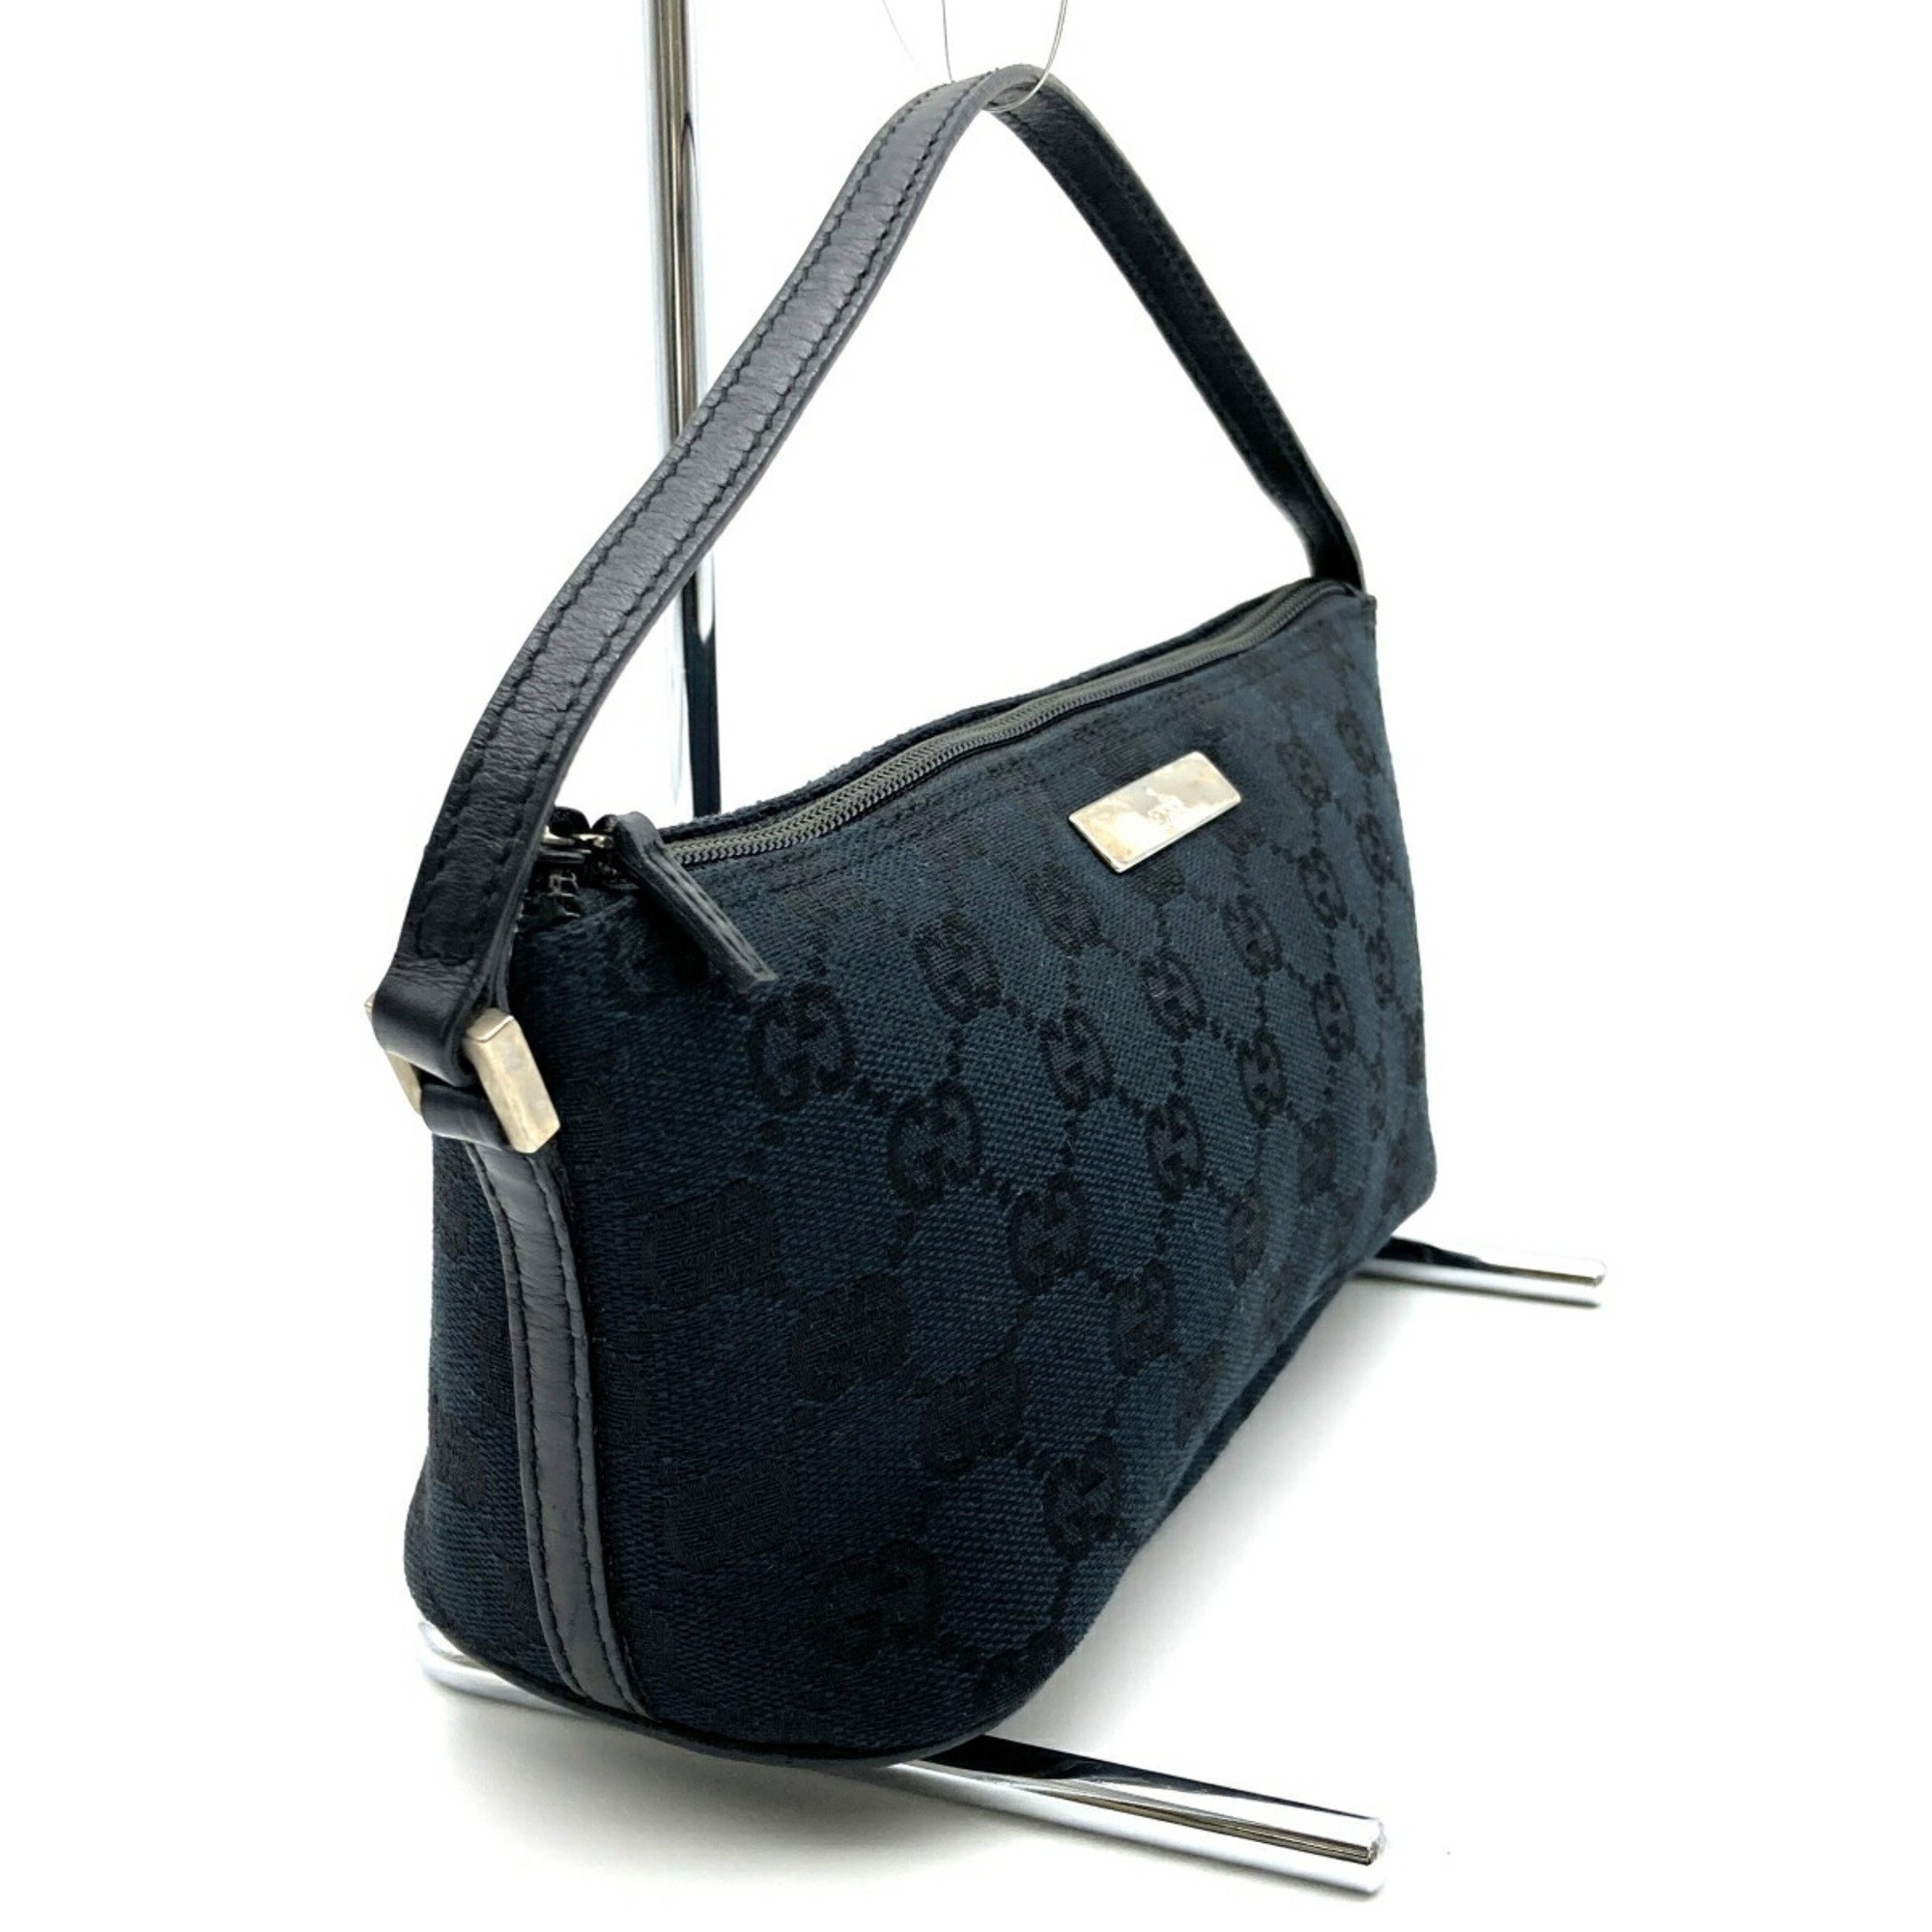 GUCCI Gucci GG pattern handbag accessory pouch mini bag black ladies fashion 039 1108 USED